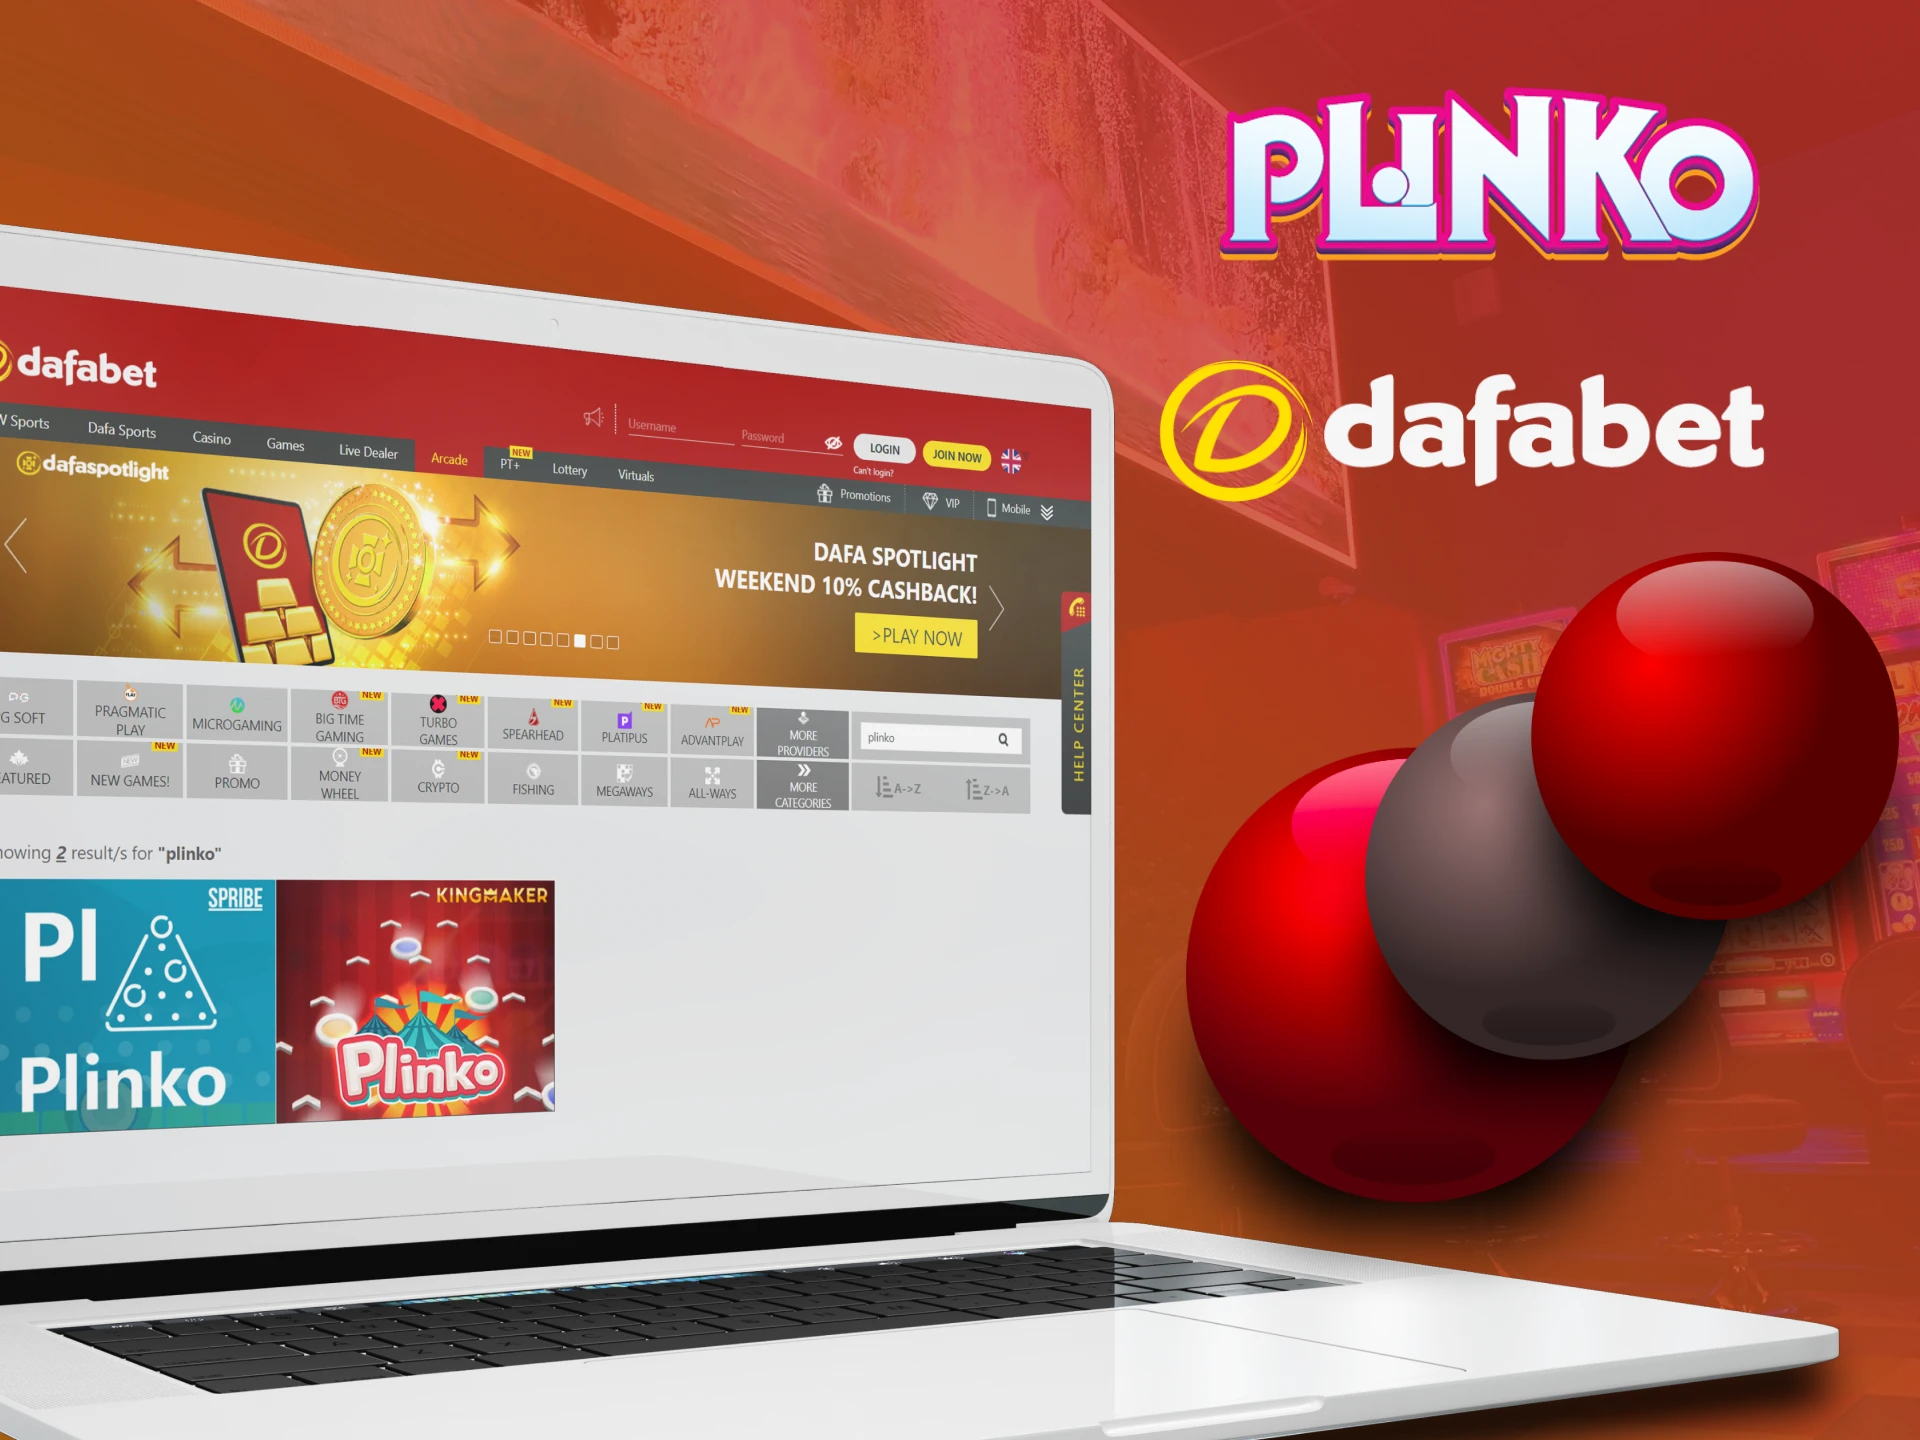 Play Plinko on the Dafabet website.